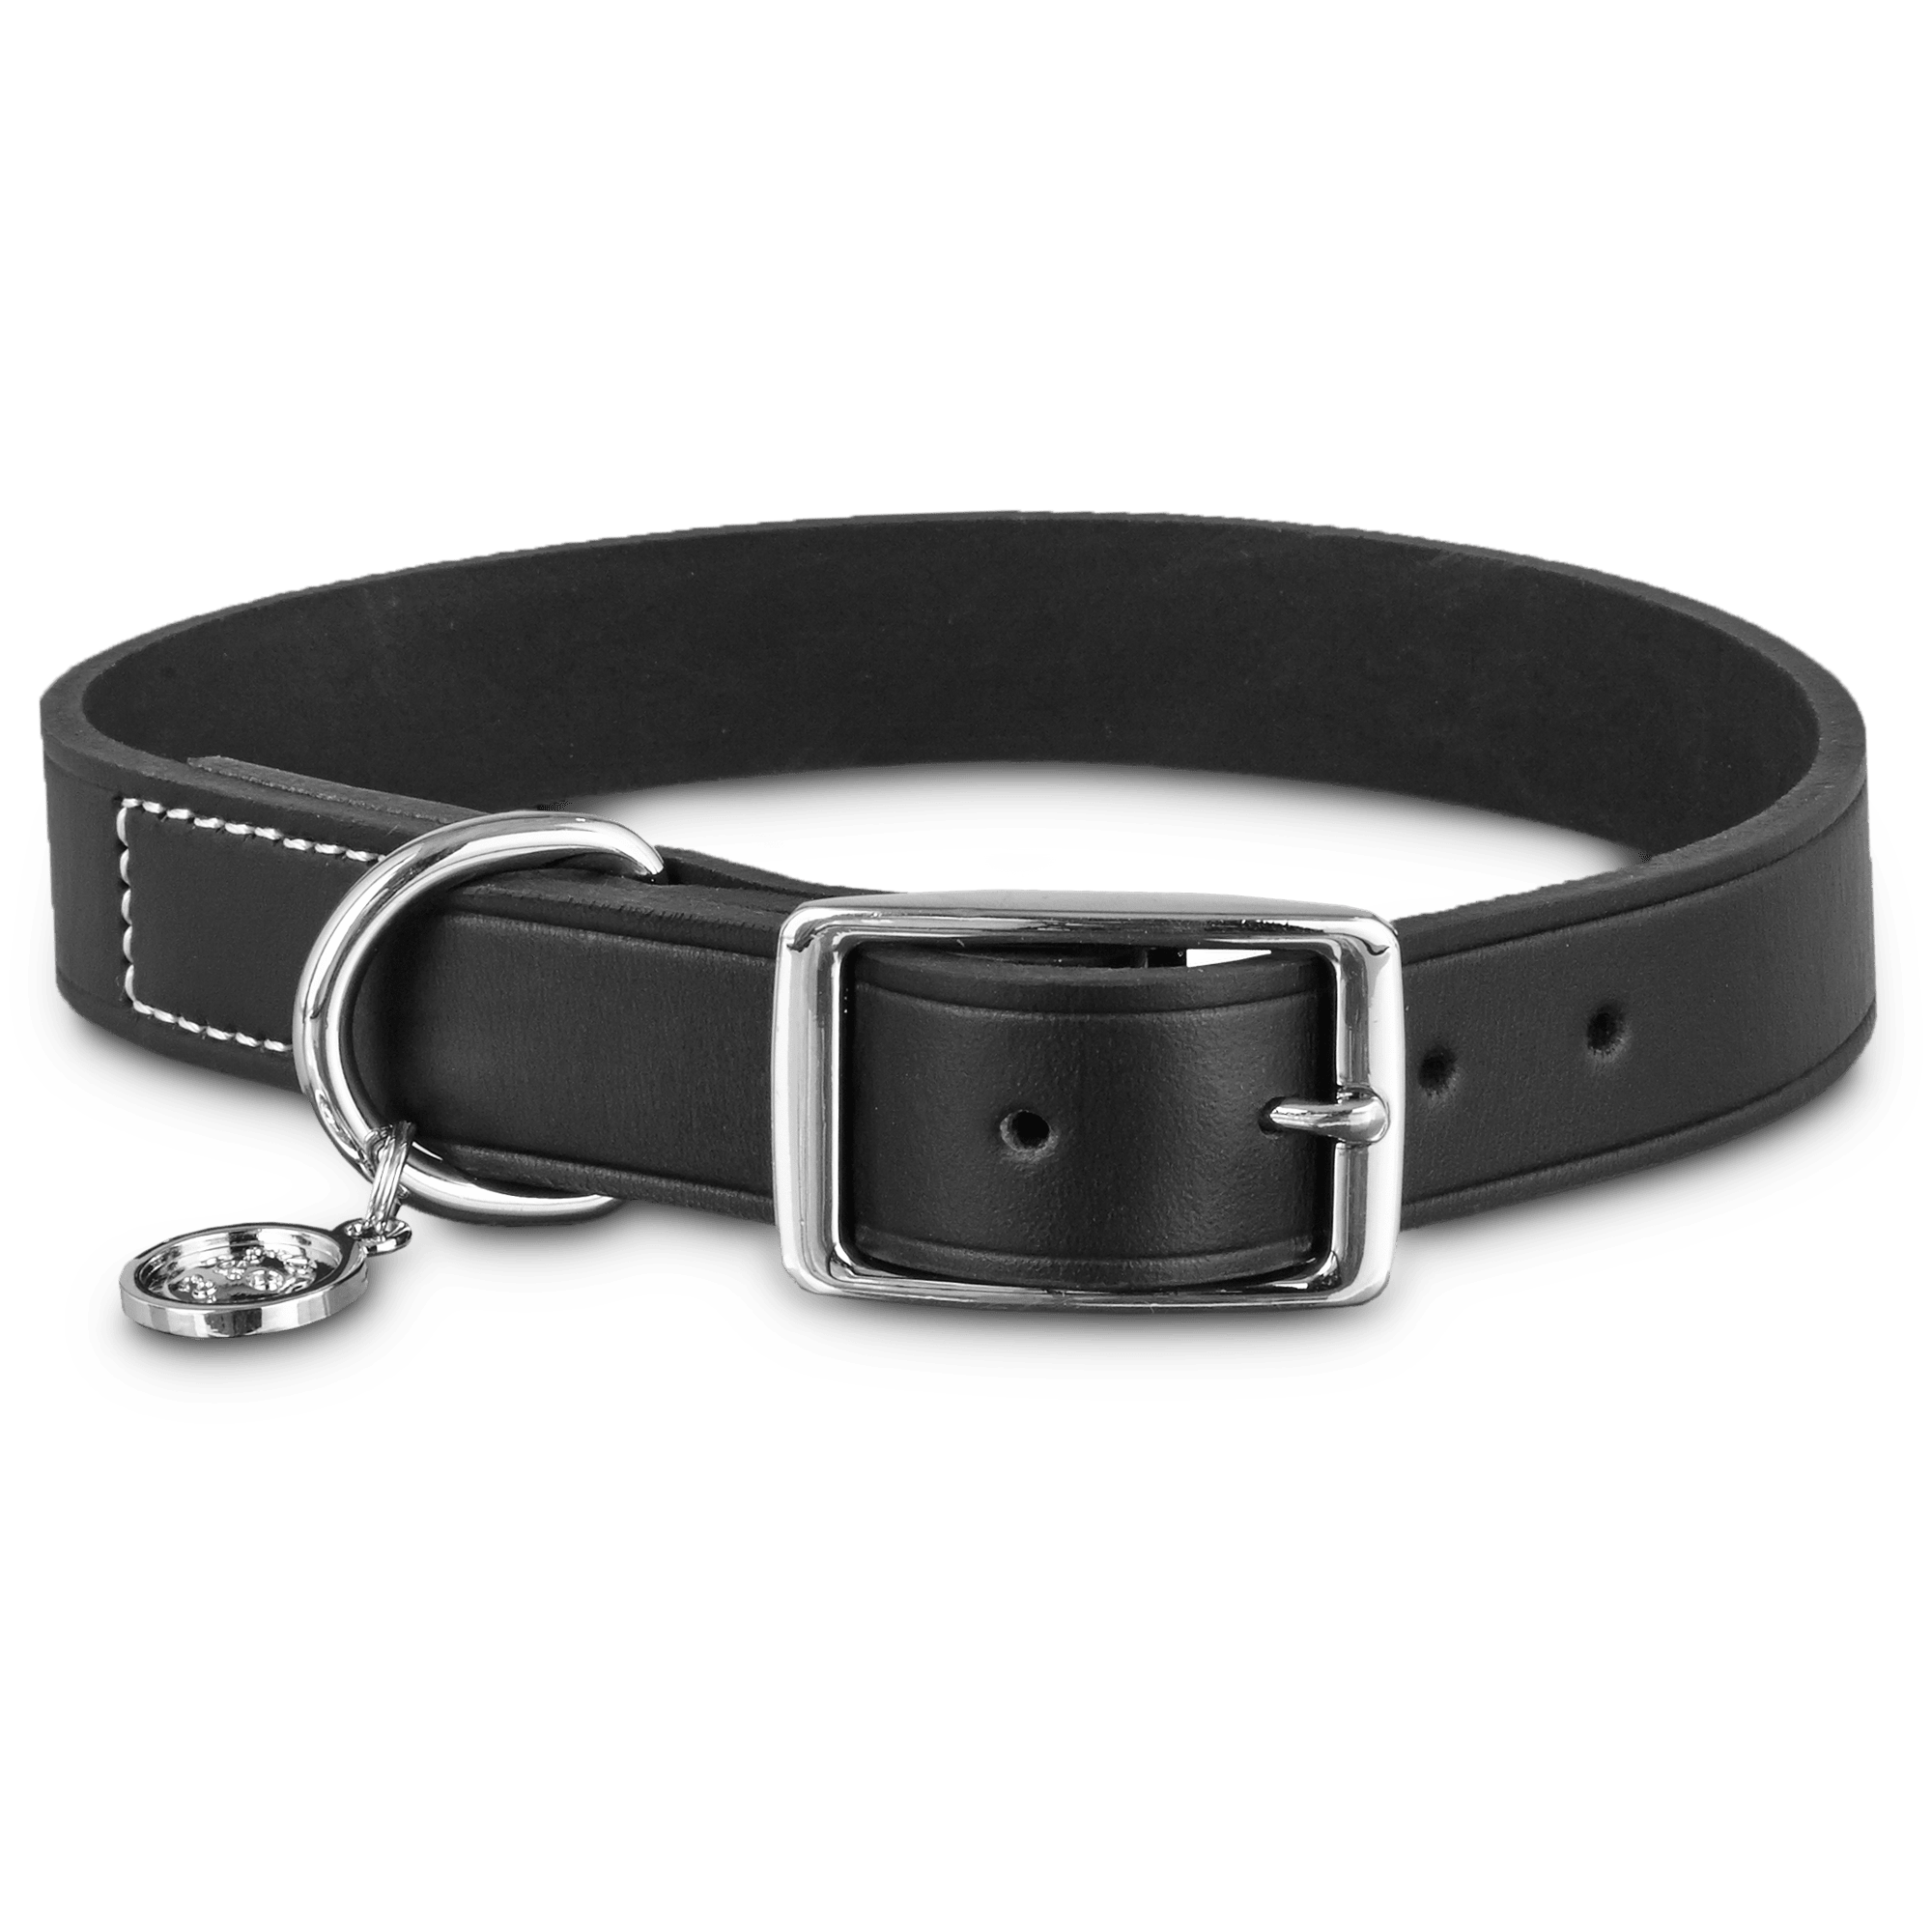 black dog collar